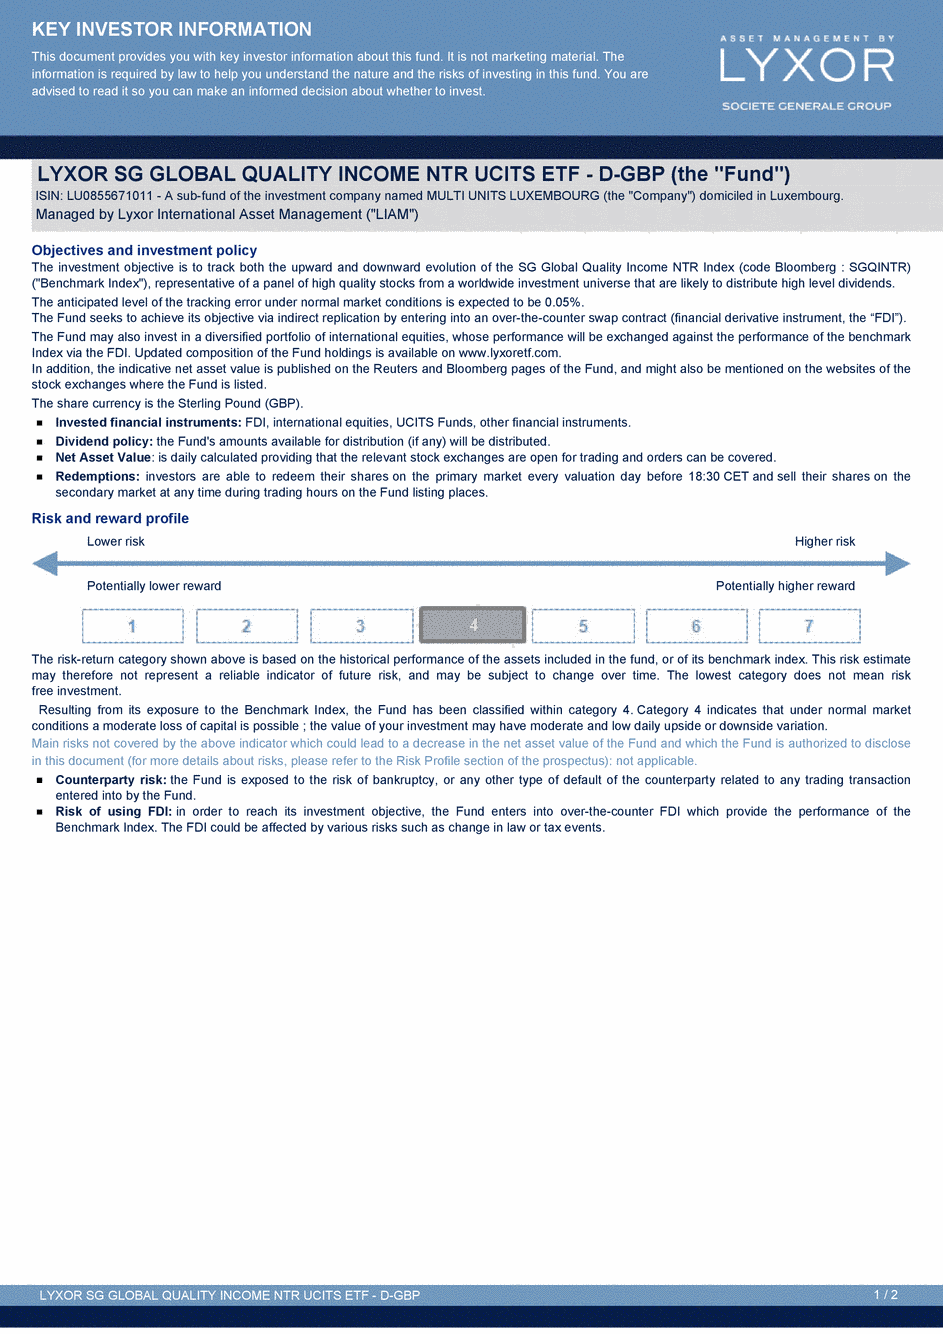 DICI Lyxor SG Global Quality Income NTR UCITS ETF - D-GBP - 30/10/2015 - Anglais